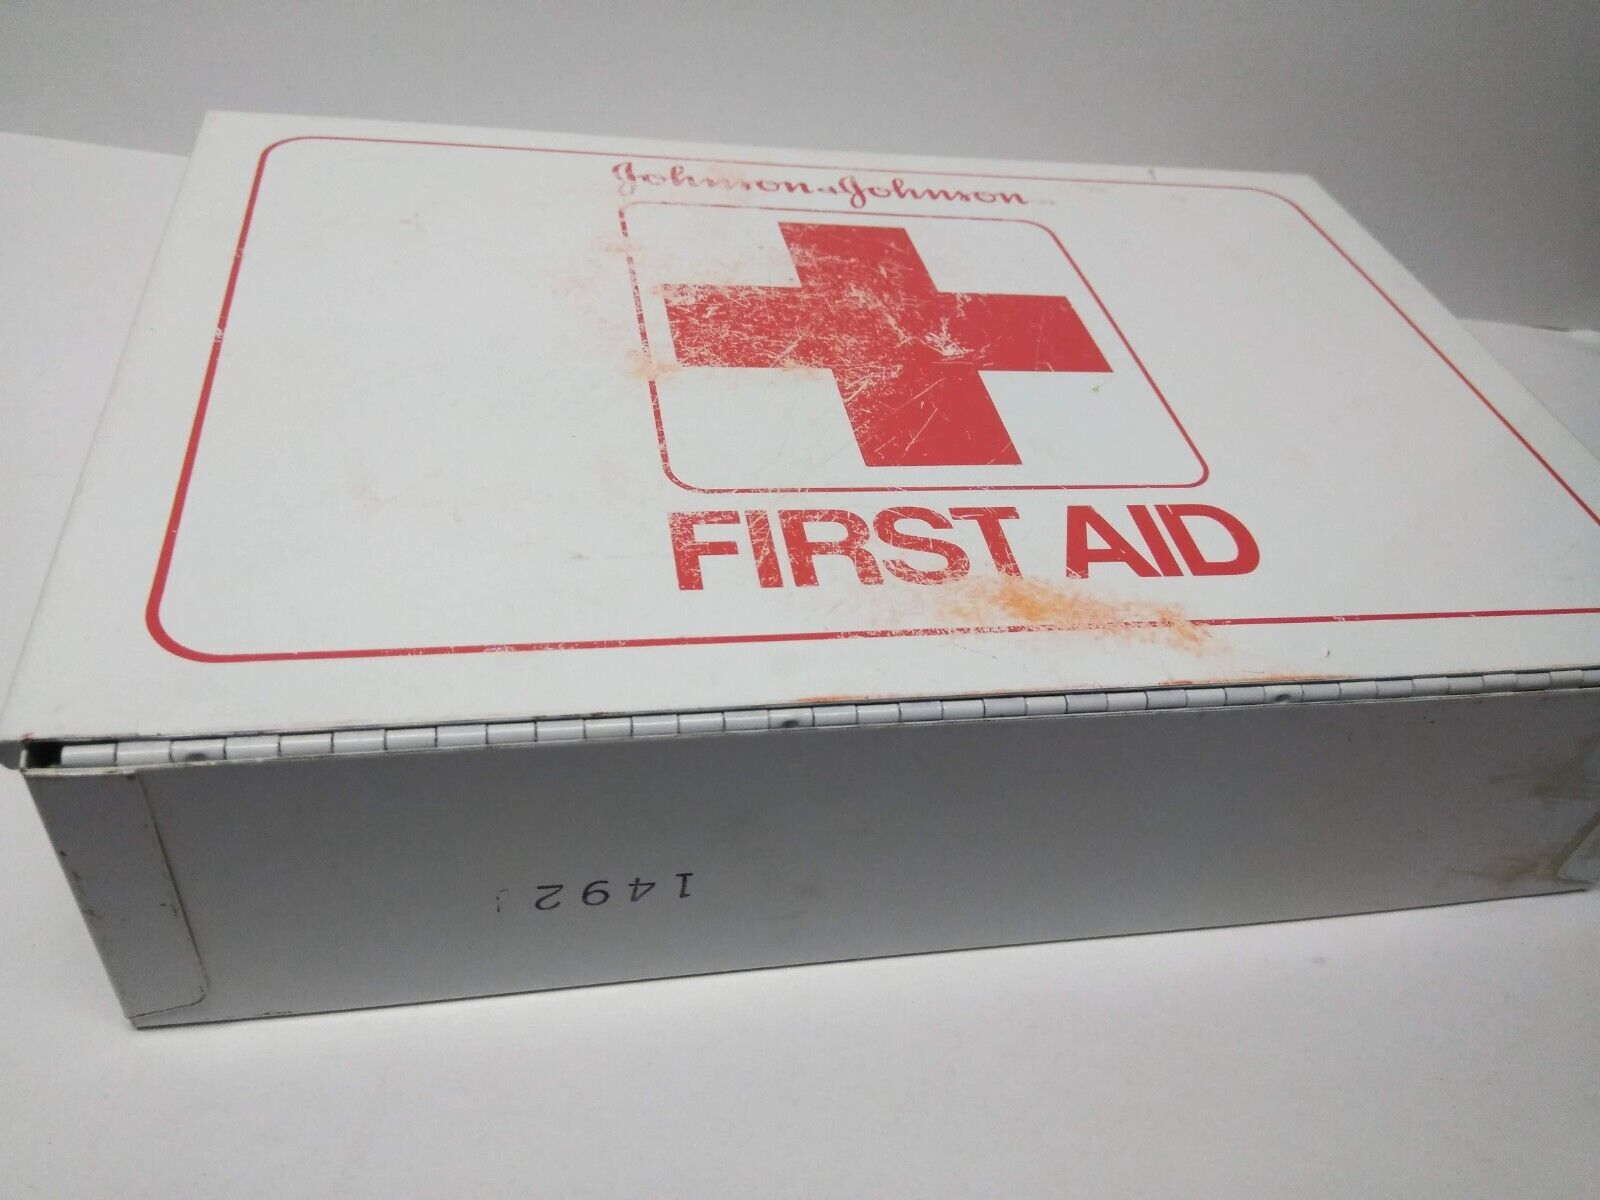 VTG Johnson & Johnson First Aid Kit 8167 White Metal Wall Mount Box w/ Contents